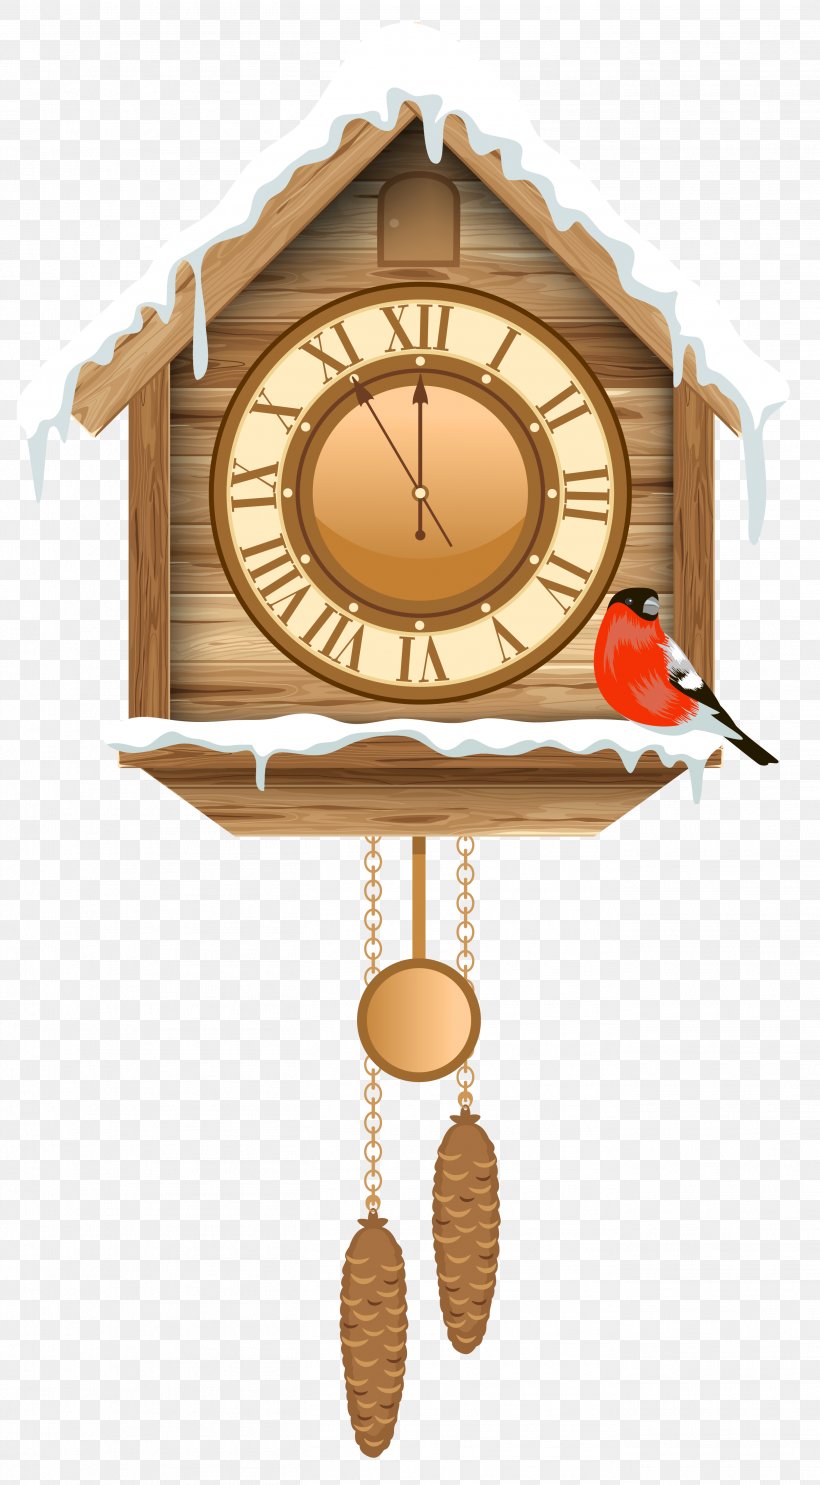 Cuckoo Clock Pendulum Clock Clip Art, PNG, 2722x4932px, Cuckoo Clock, Alarm Clocks, Clock, Cuckoos, Floor Grandfather Clocks Download Free